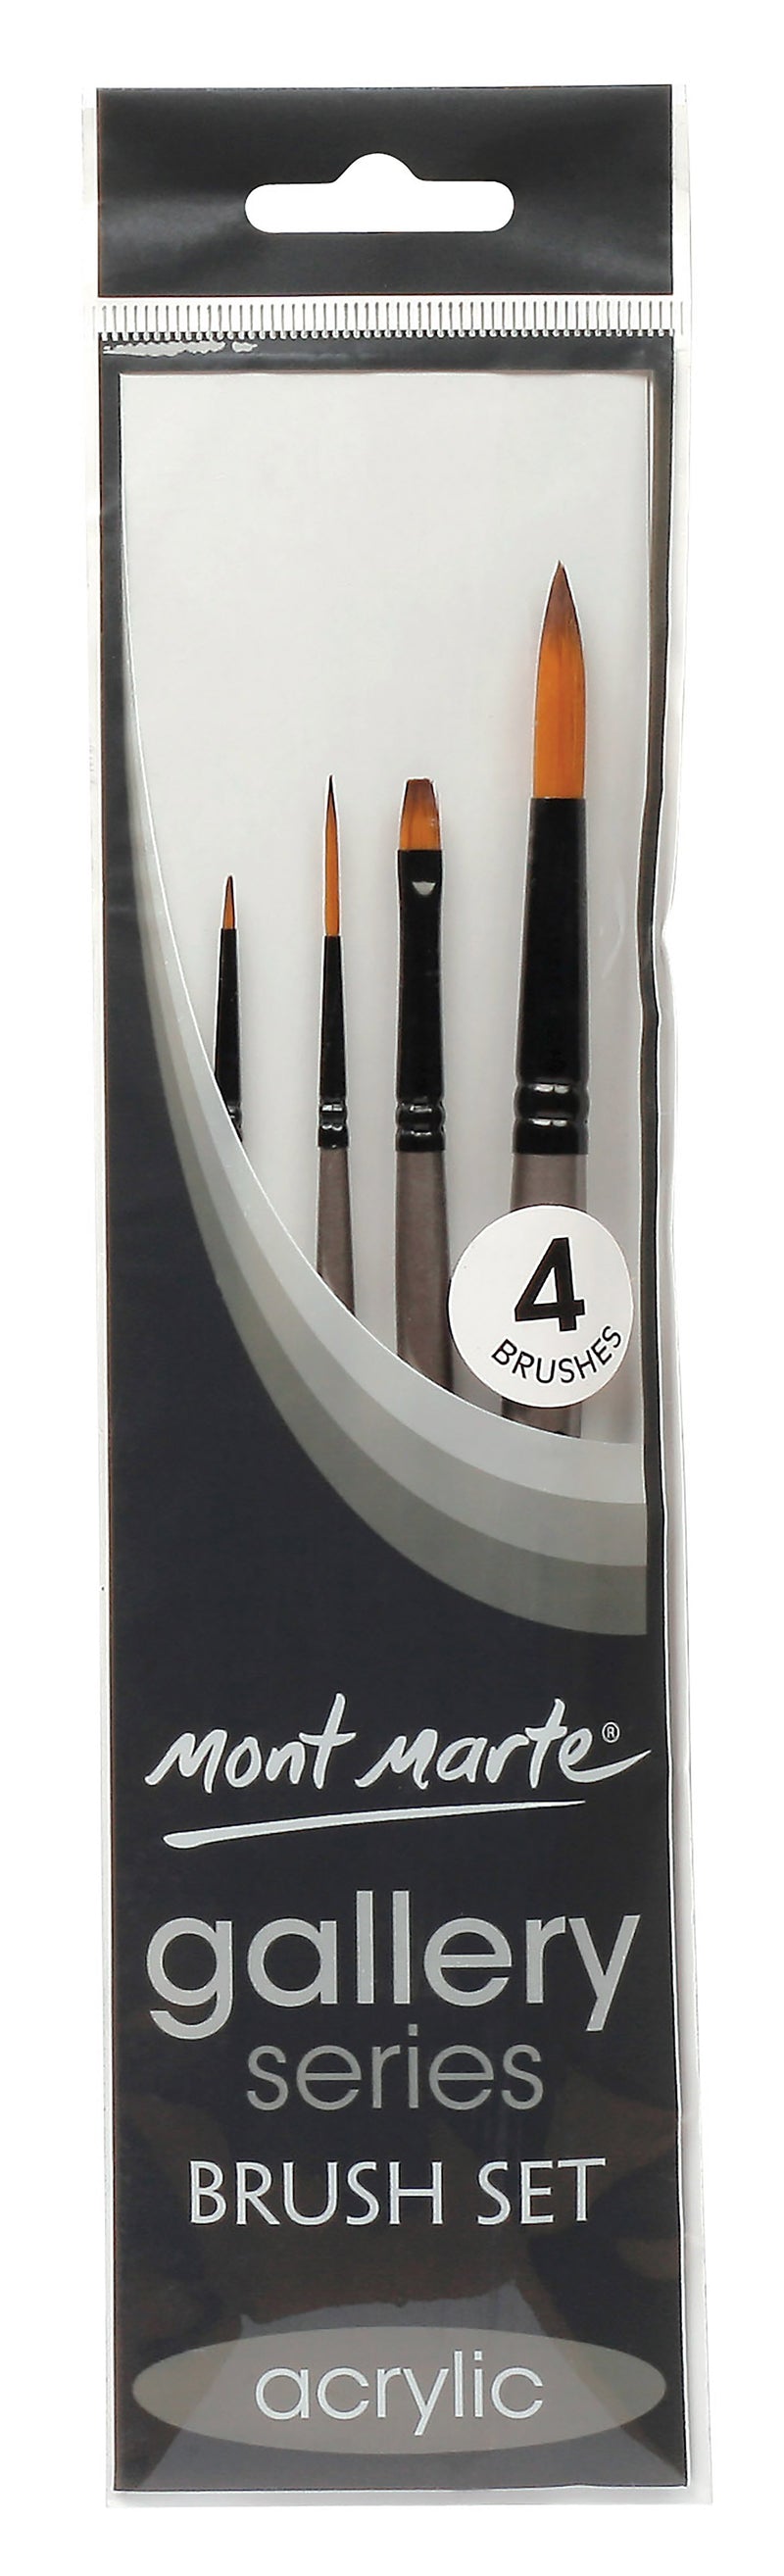 Gallery Paint Brush Set, set of 4, acrylic, tol1119